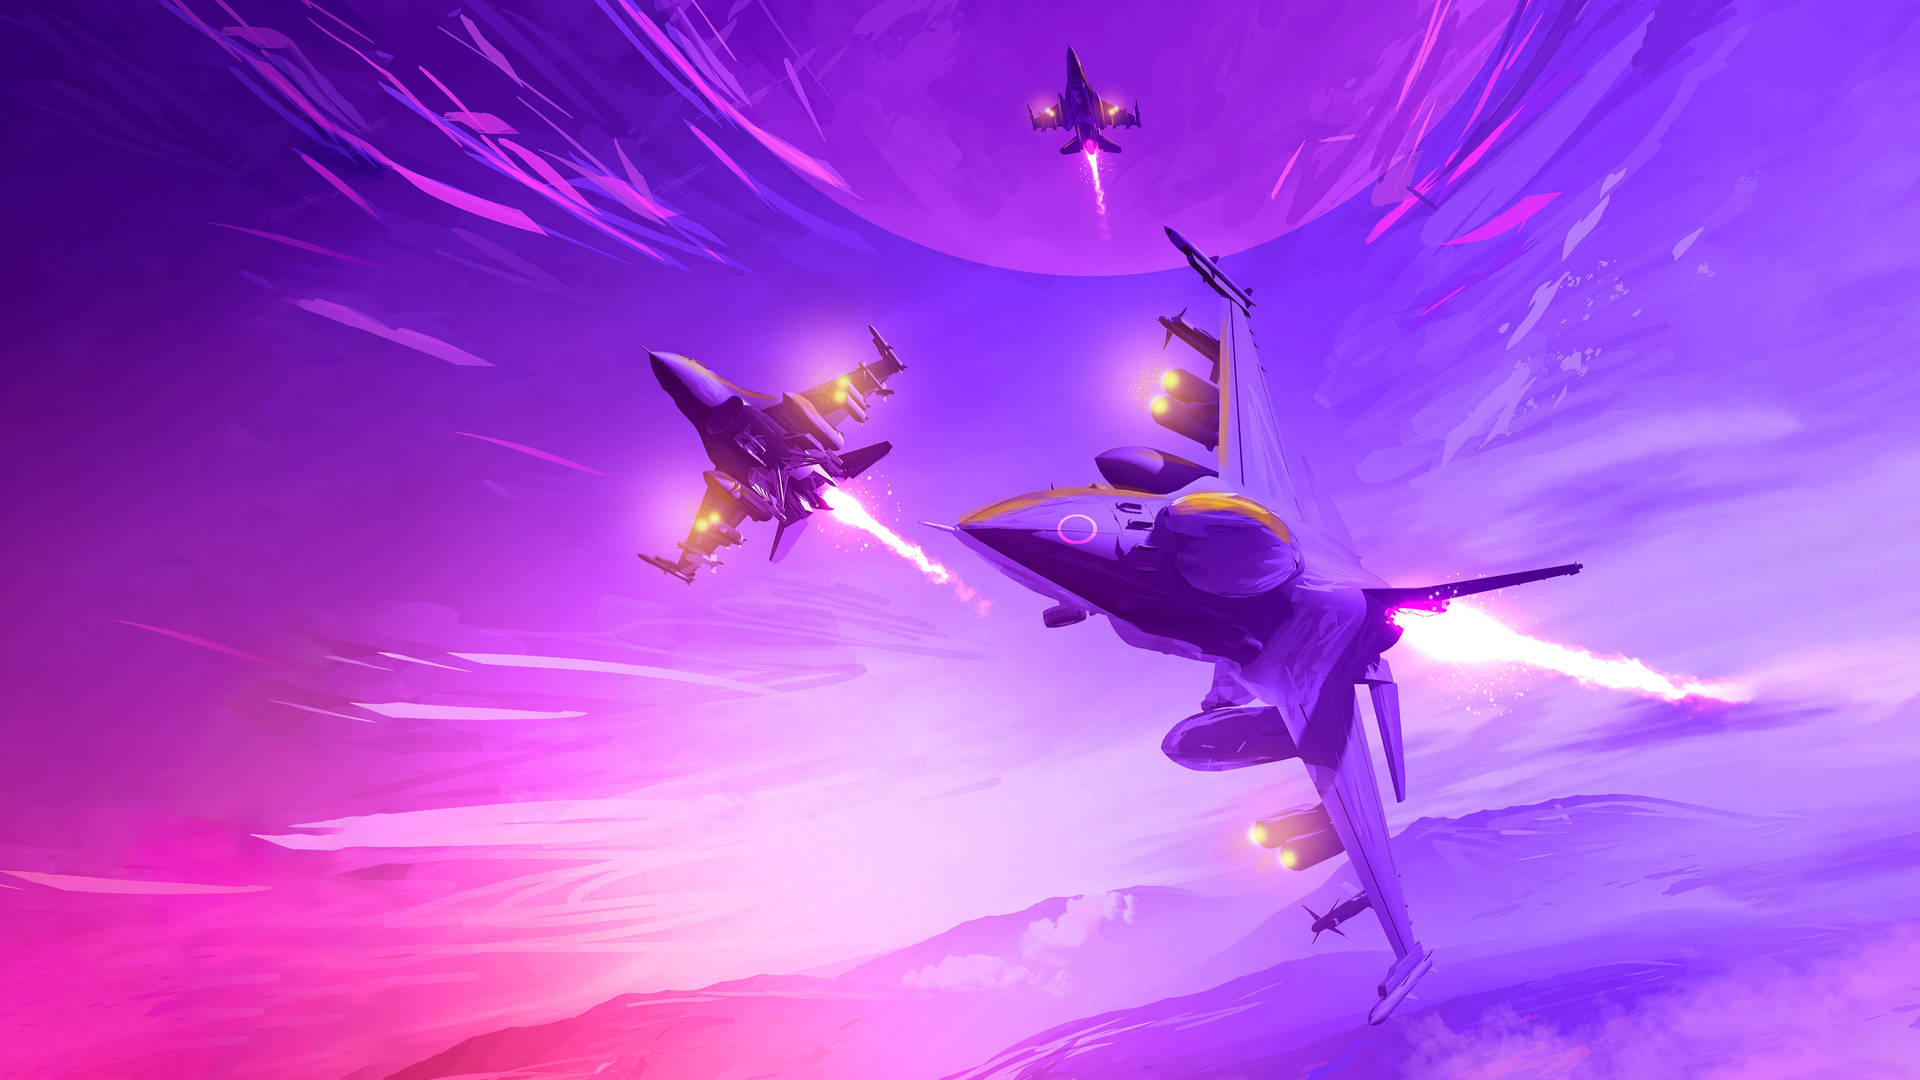 Download Purple Anime Jet Fighter Wallpaper 